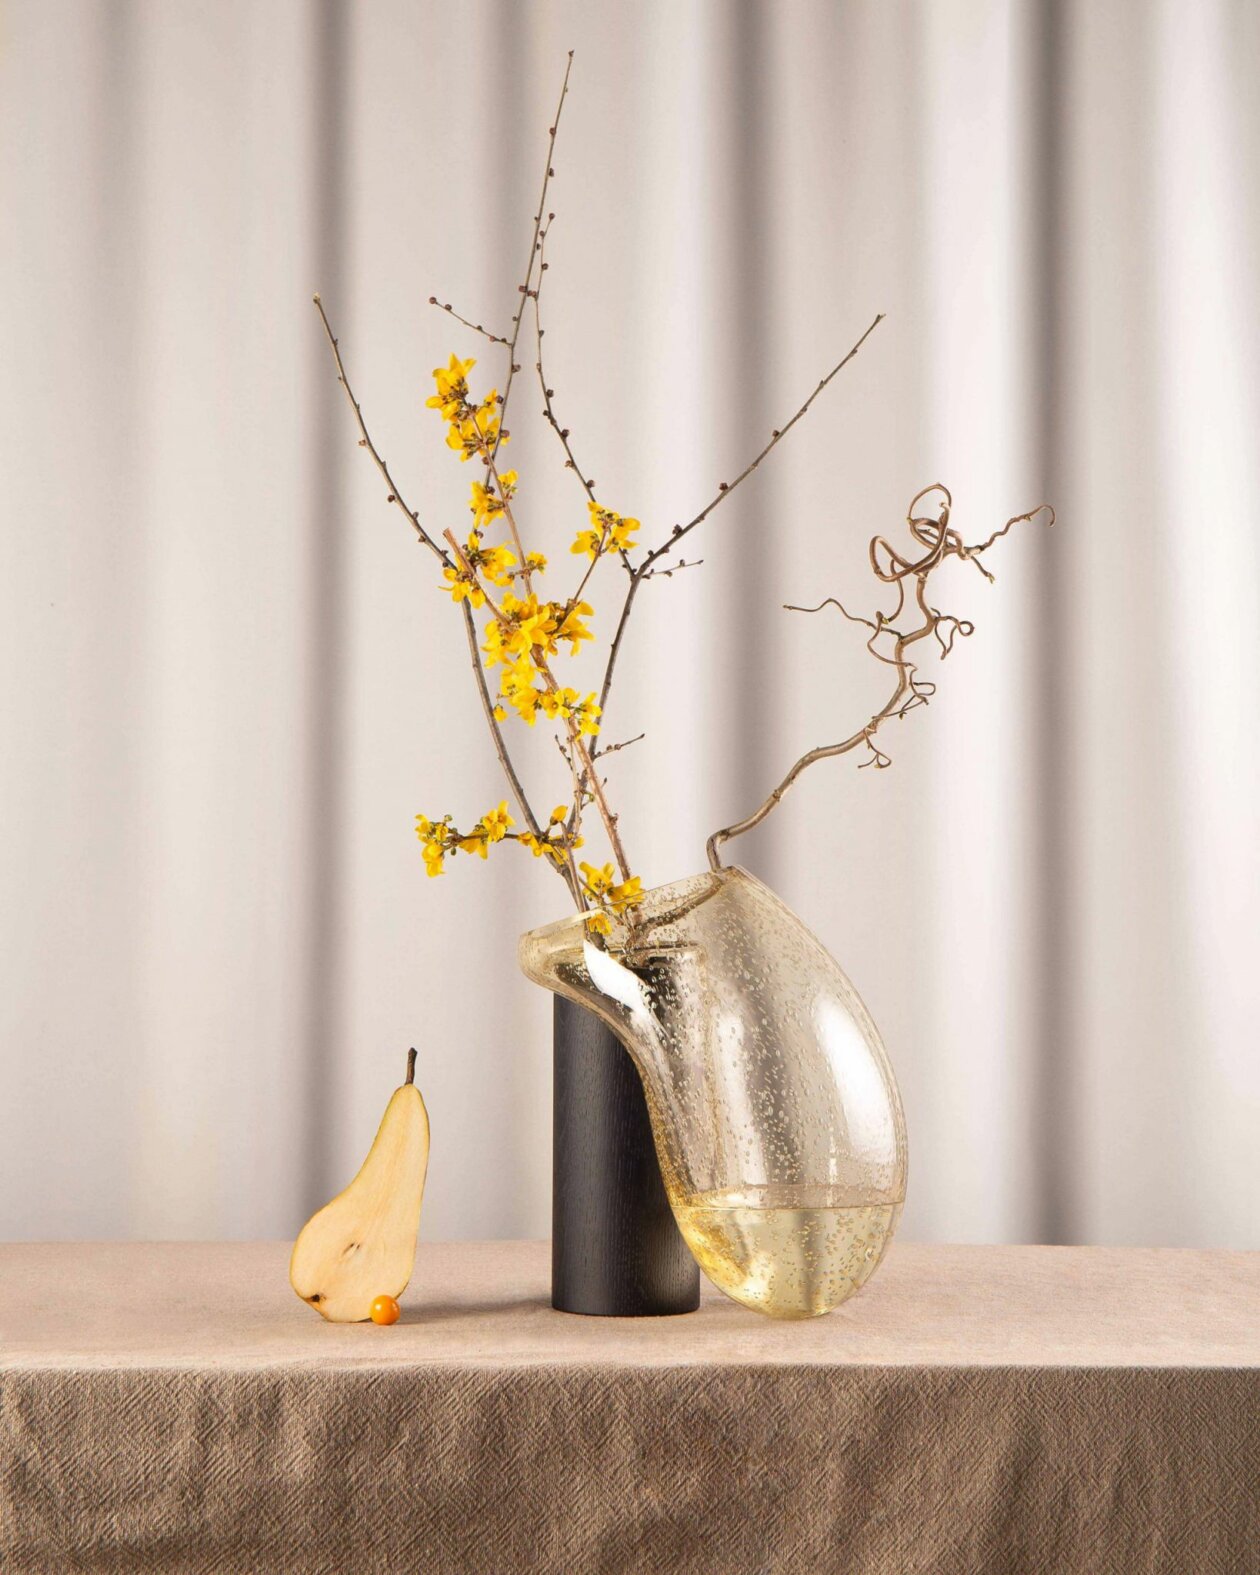 Gutta, A Melting Glass Vase Series By Kateryna Sokolova (17)